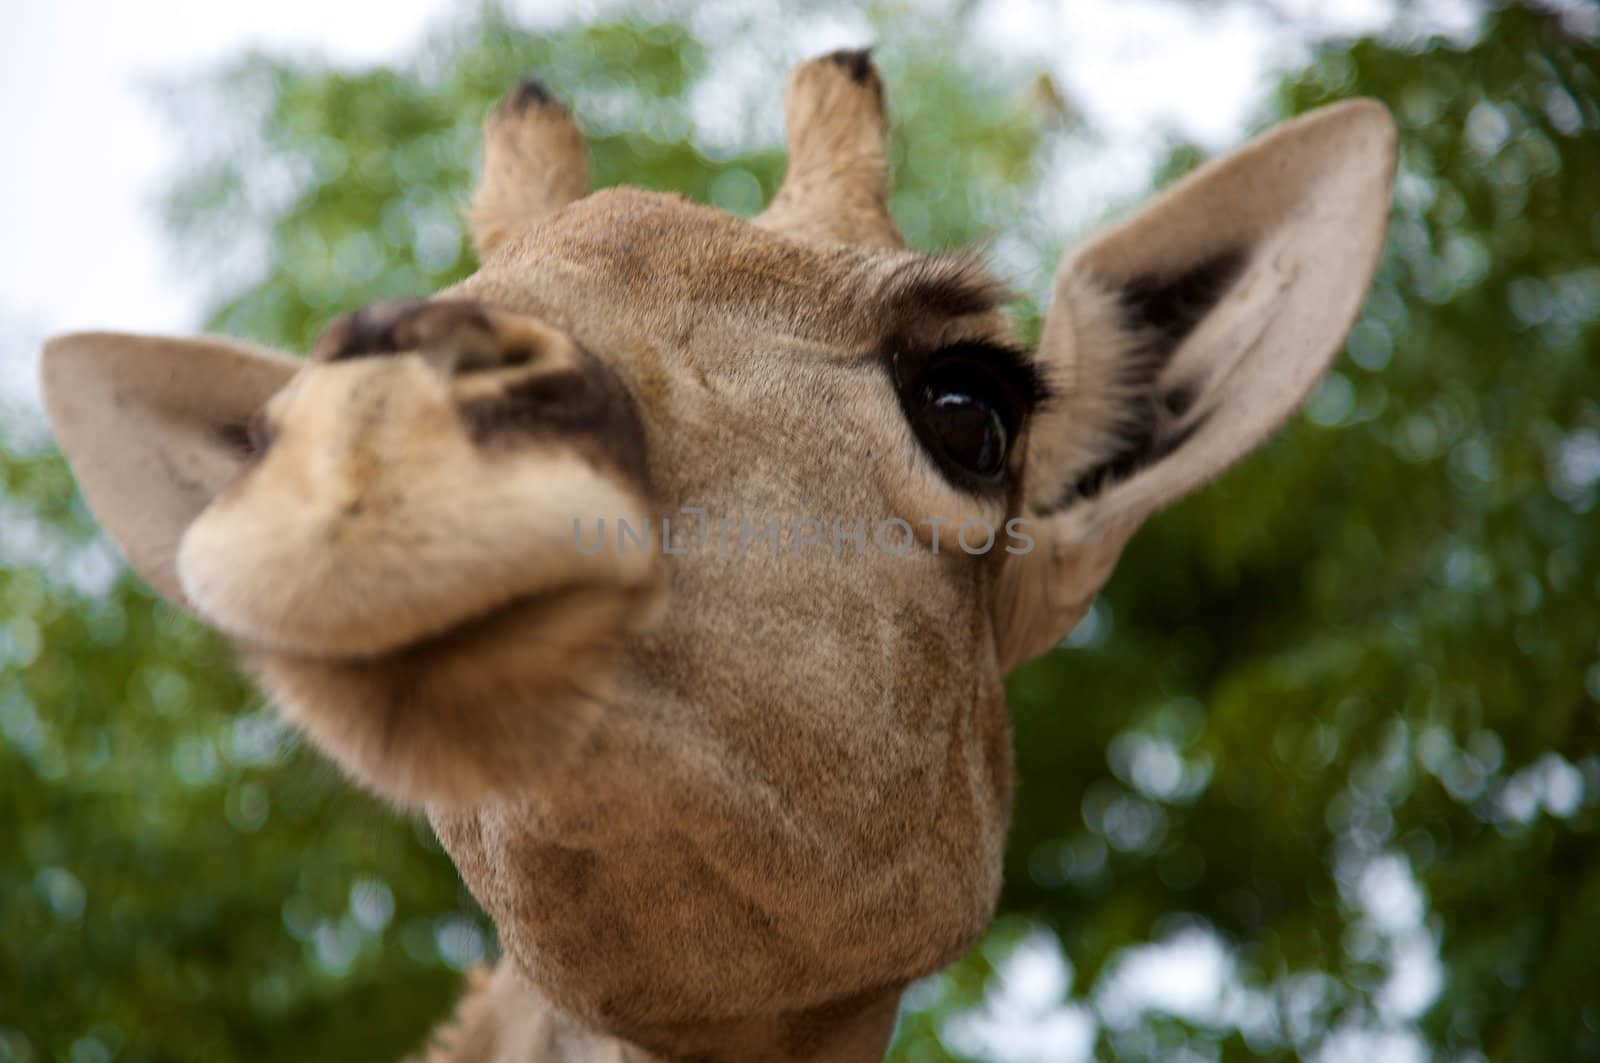 Head of giraffe in Namibia by watchtheworld